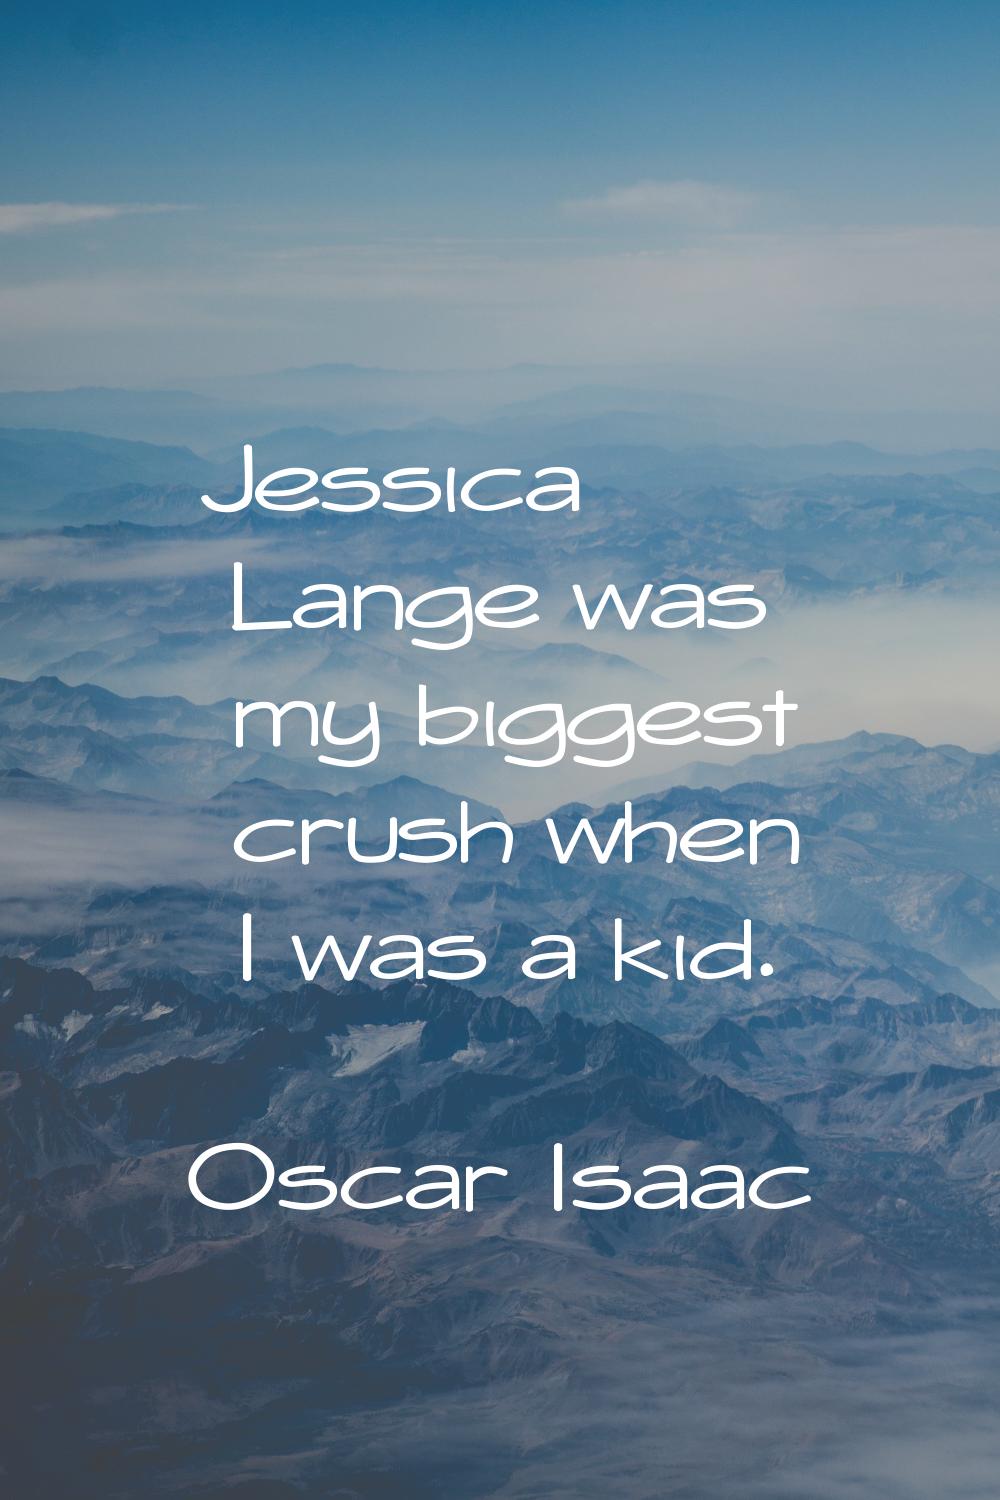 Jessica Lange was my biggest crush when I was a kid.